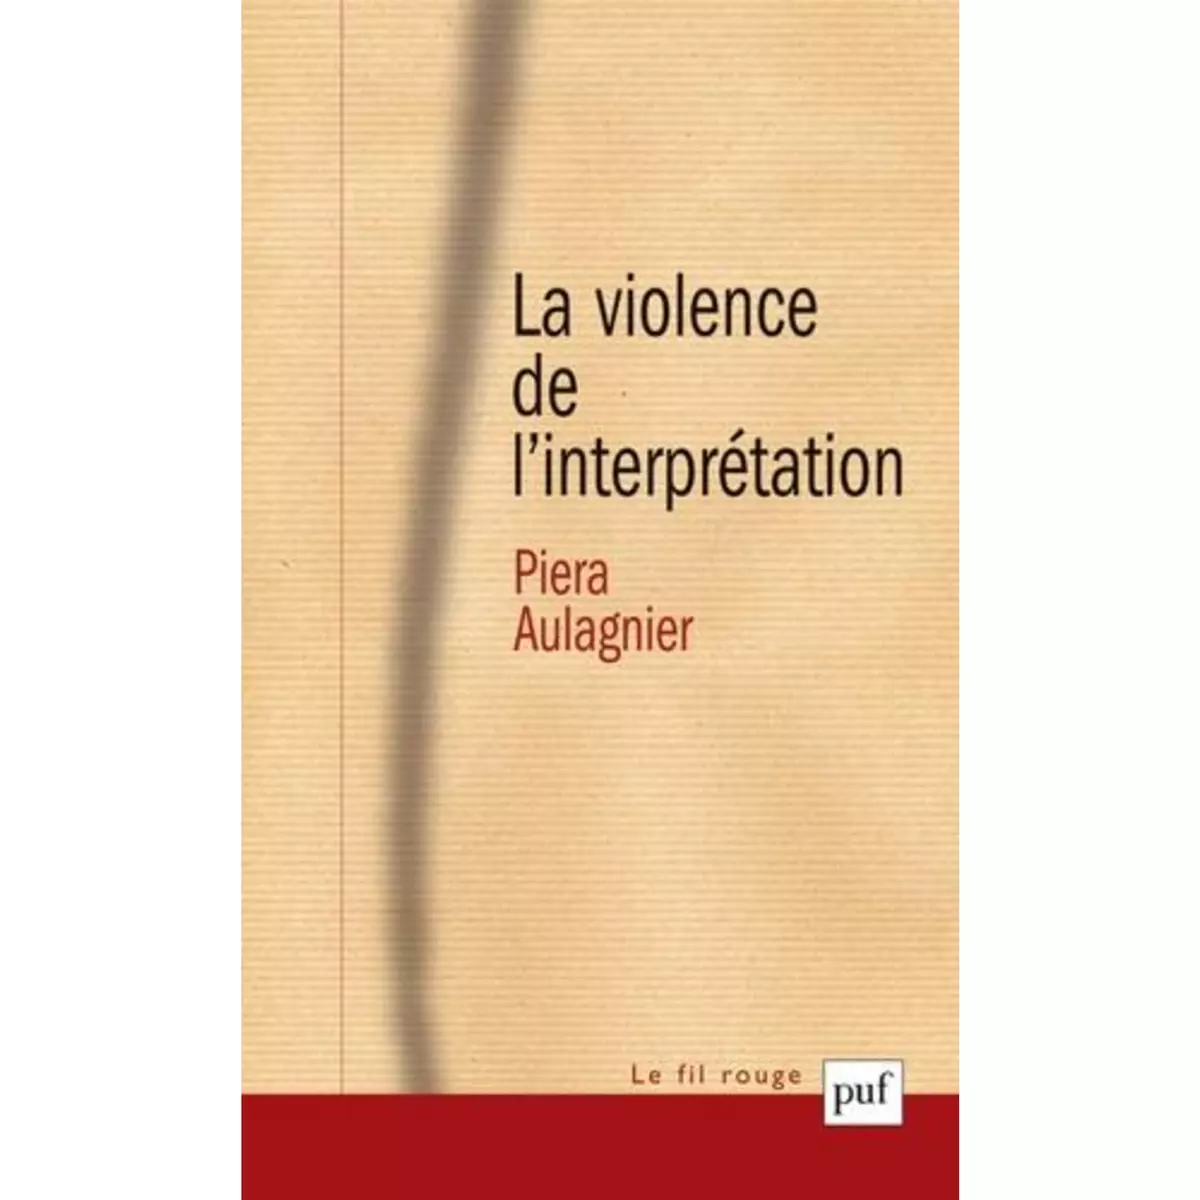  LA VIOLENCE DE L'INTERPRETATION, Aulagnier Piera